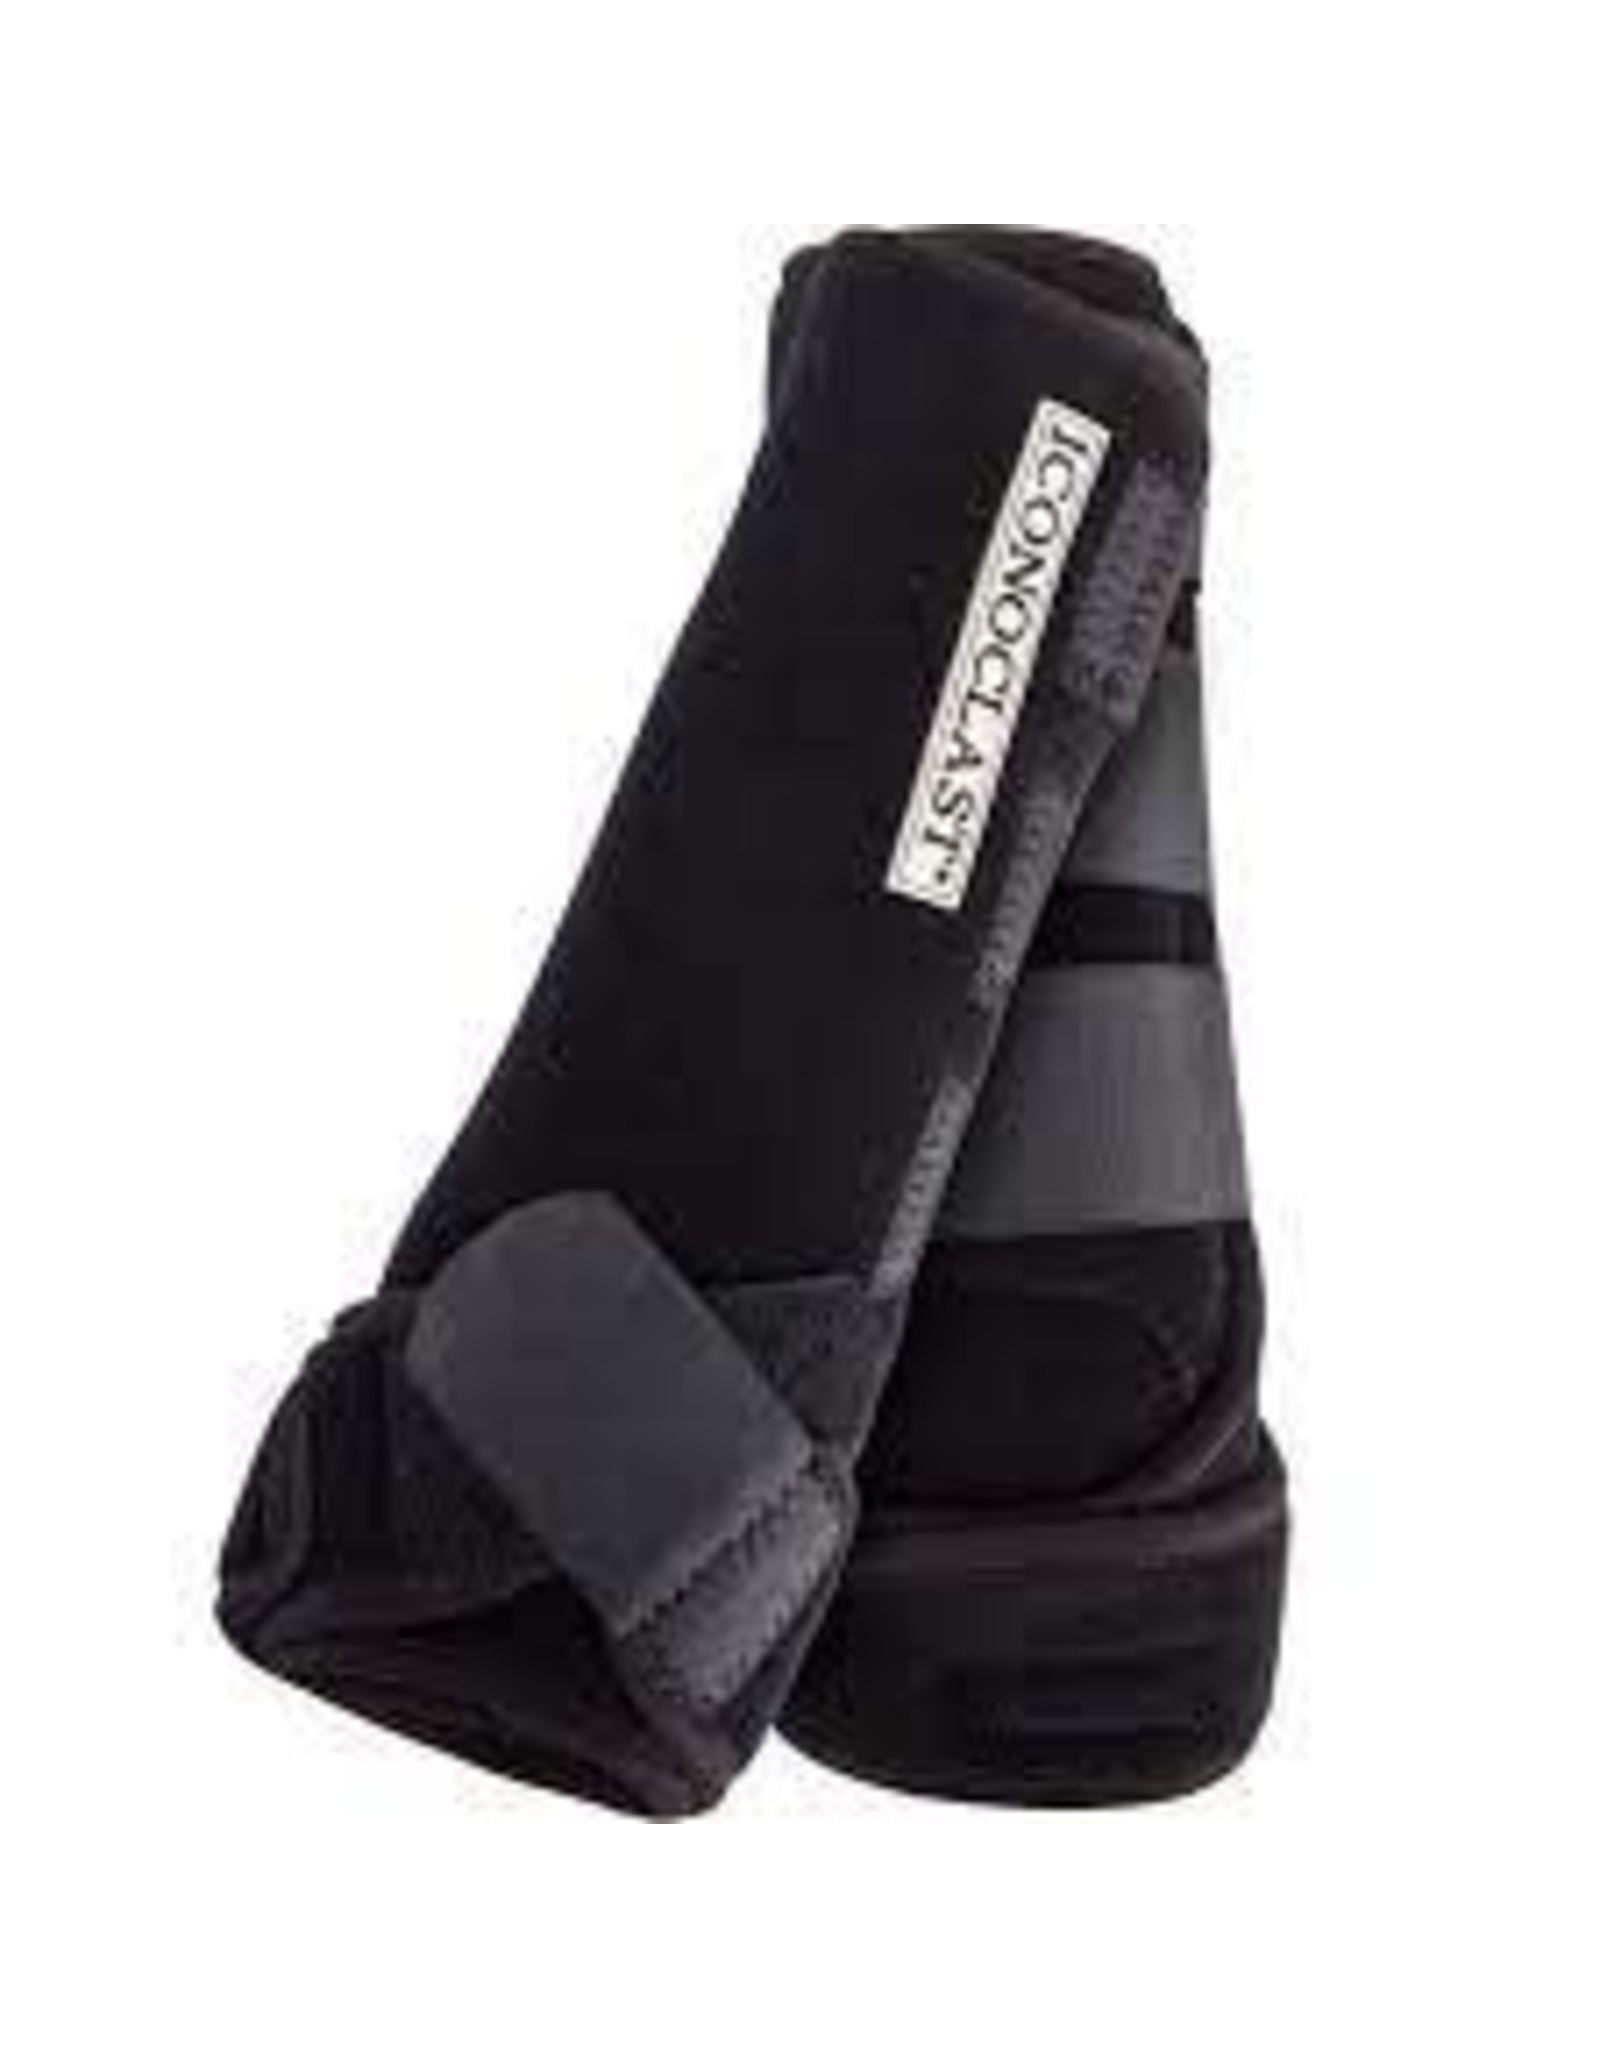 Iconoclast Tall Hind Orthopedic Support Boots - Hind - Medium XTall - Black - 1360-M-B